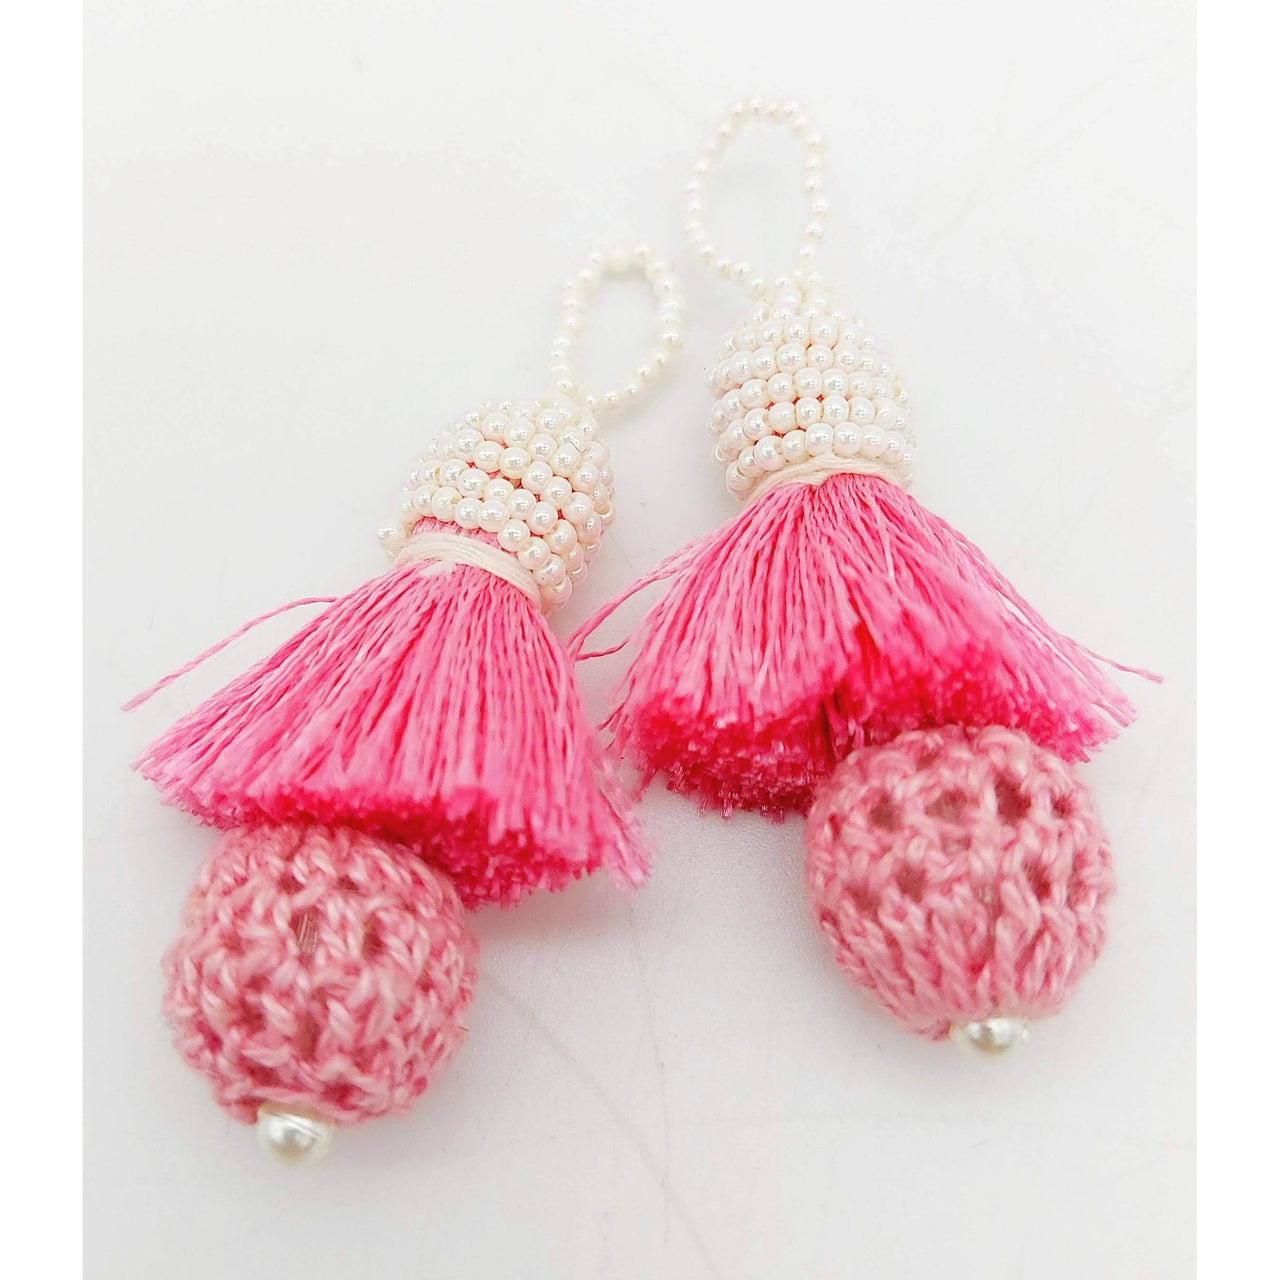 Pink Crochet Ball Tassels With White Pearls Beads, Tassel Charms, Nylon Tassels x 2